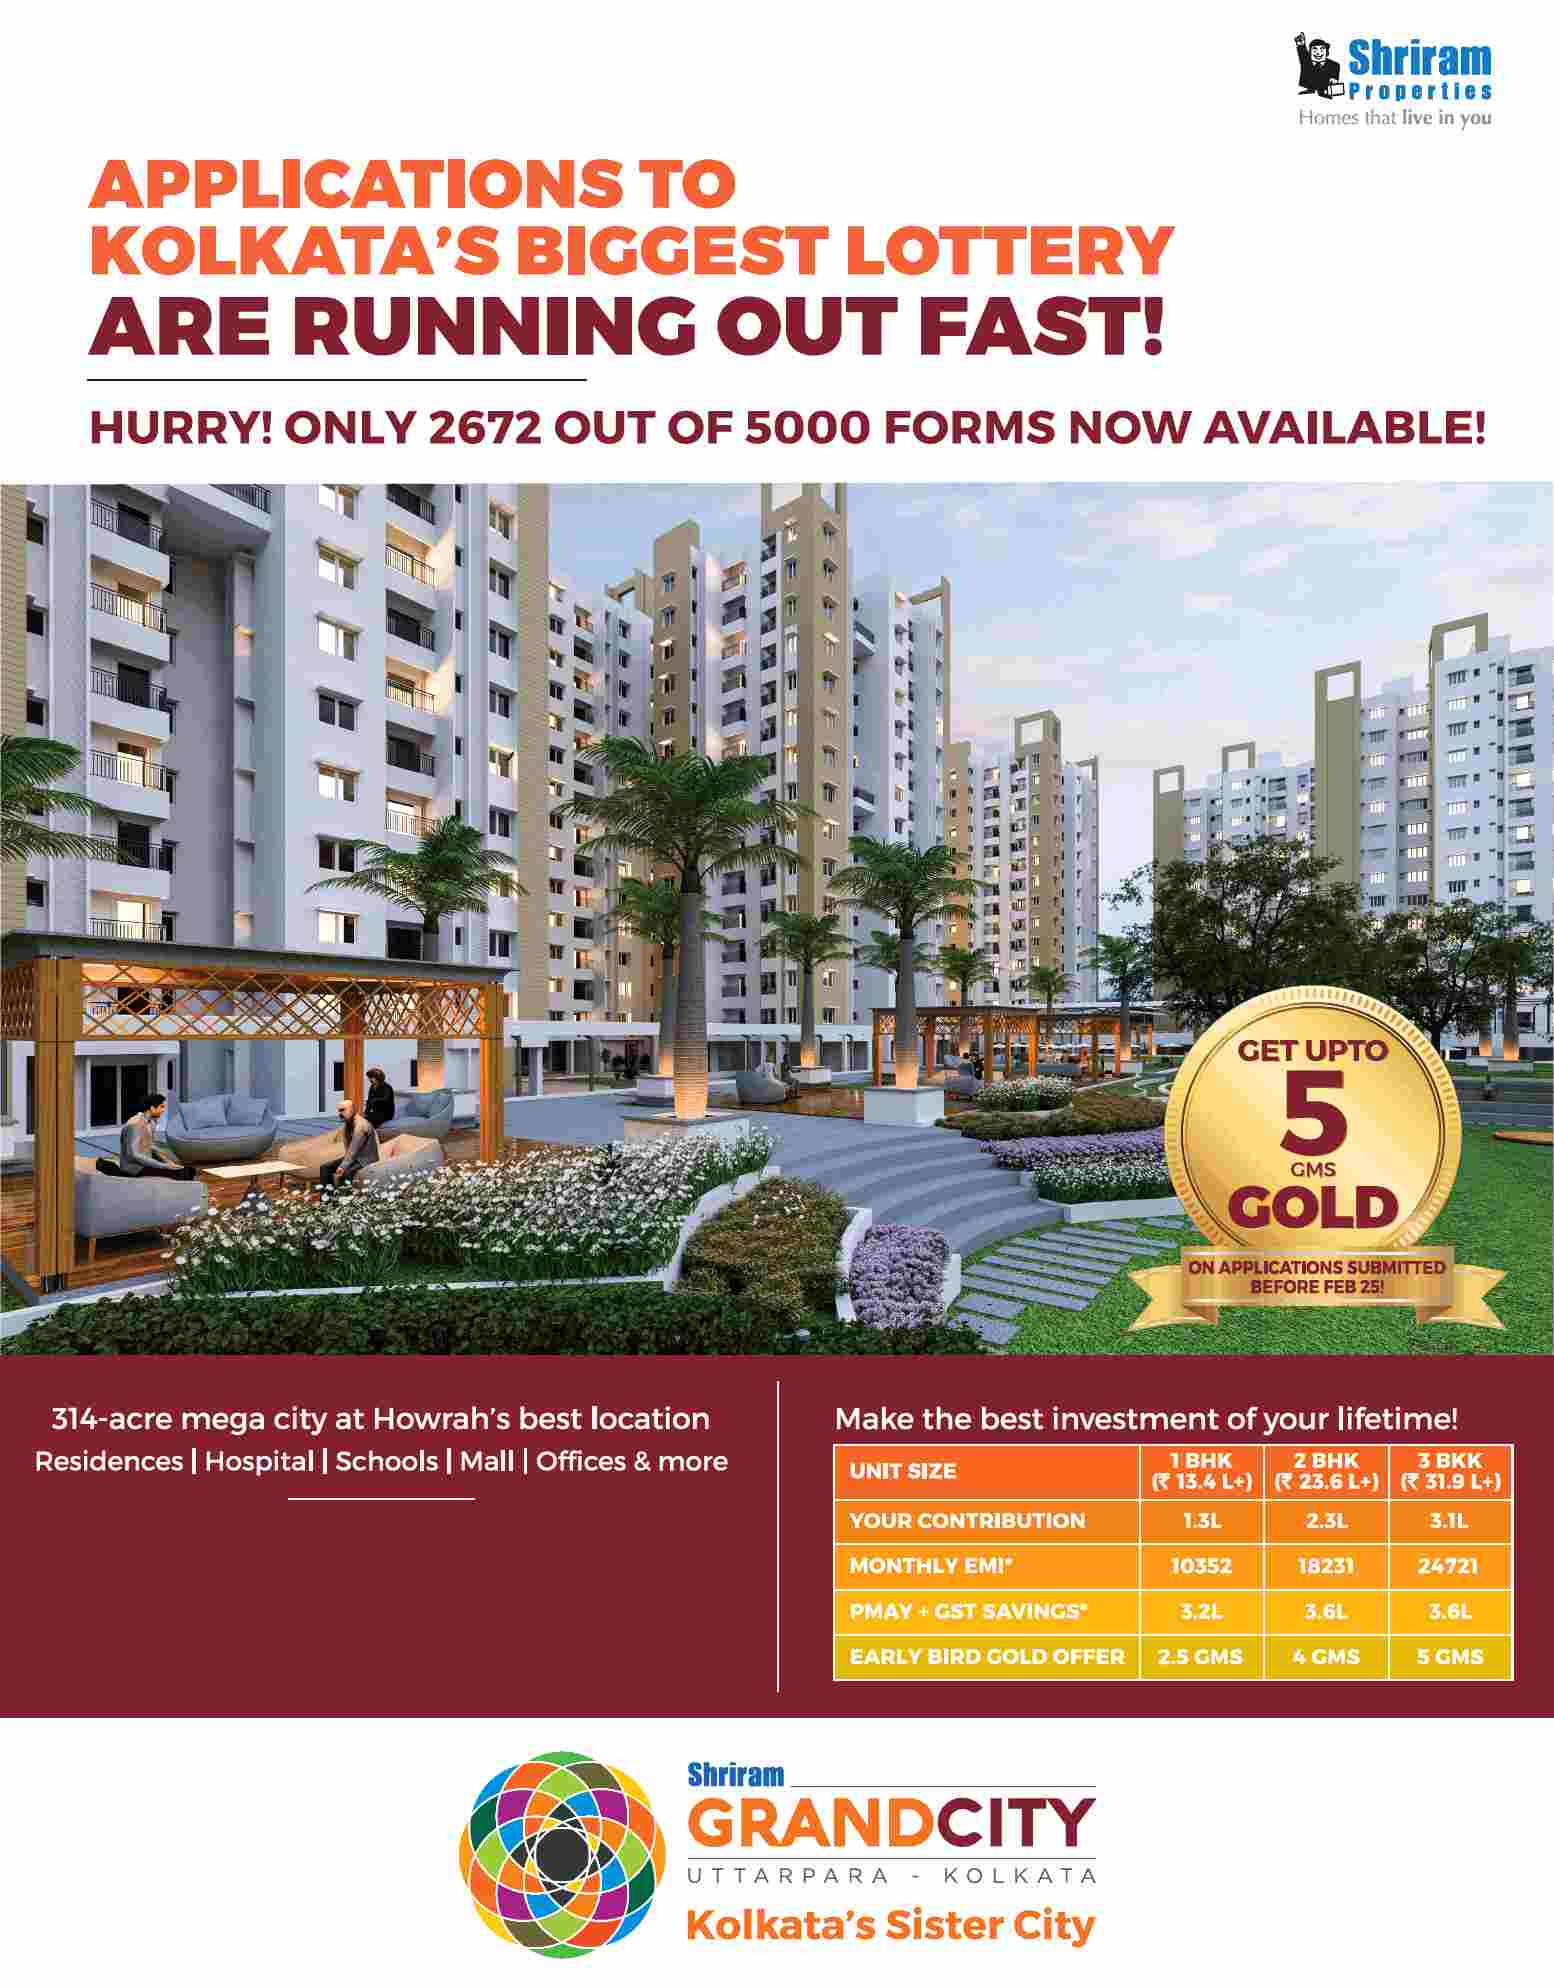 Make the best investment of your lifetime at Shriram Grand City in Kolkata Update